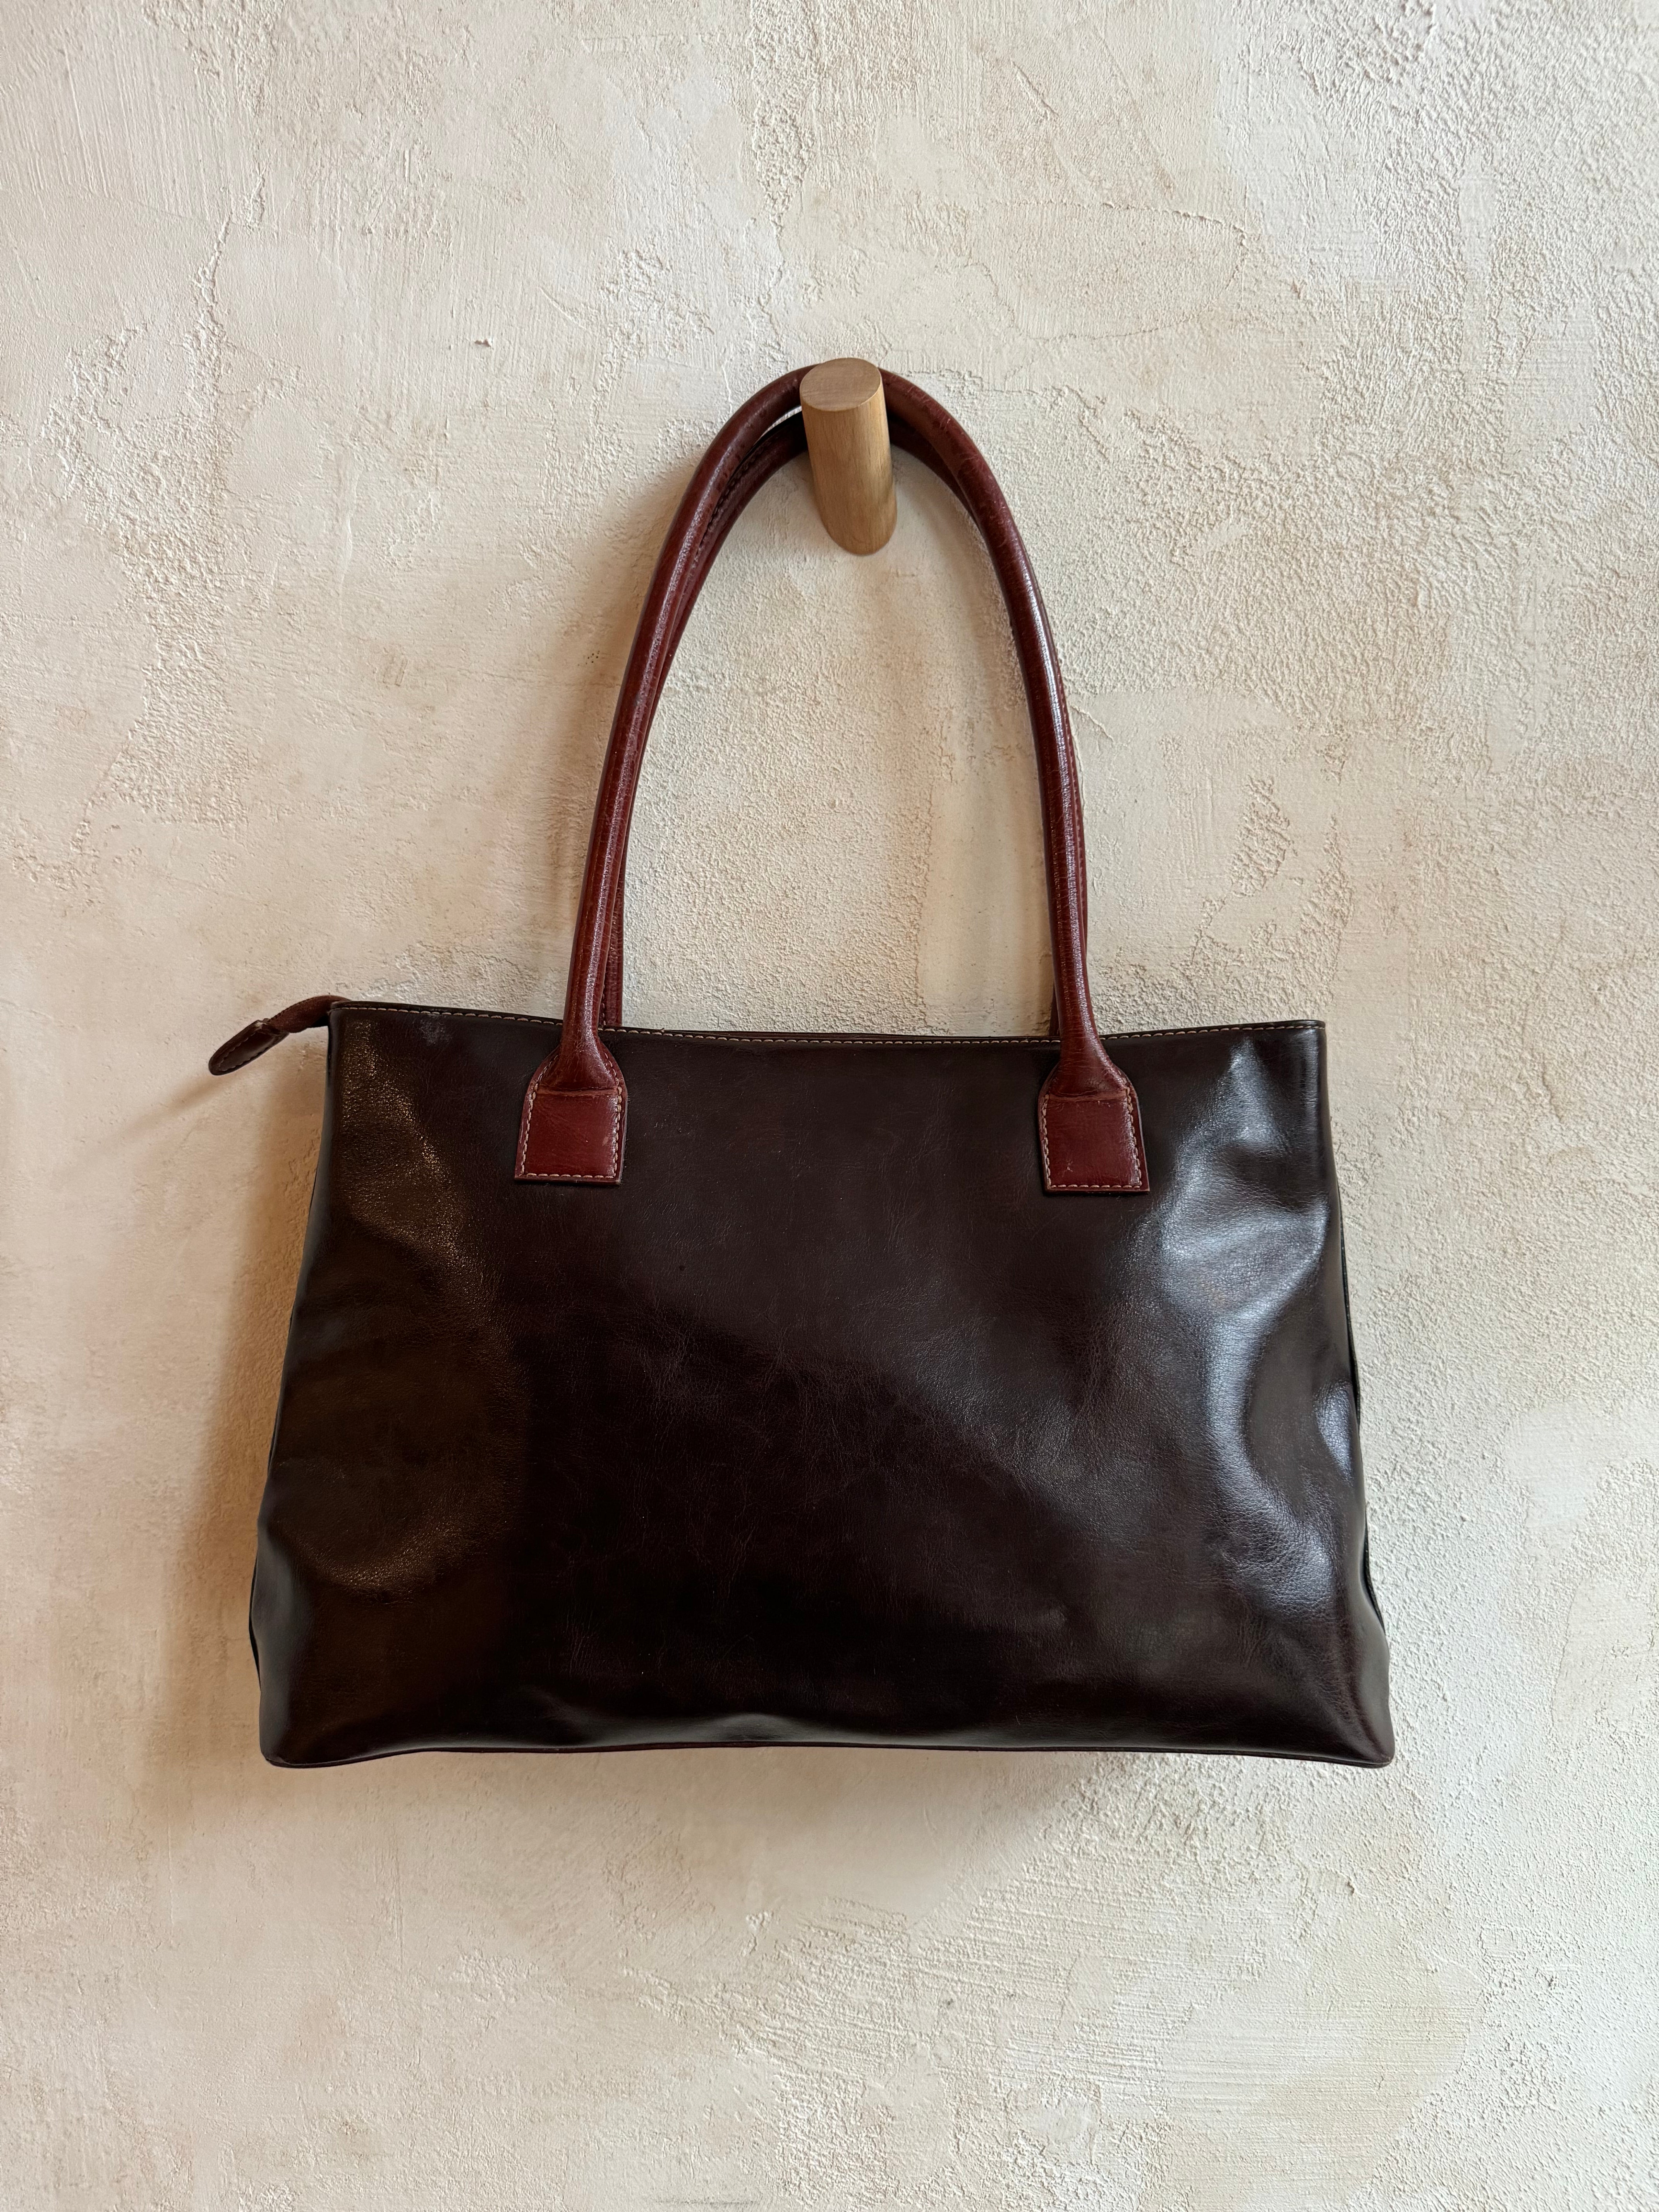 Dark Burgundy La Philipe Shoulder Bag